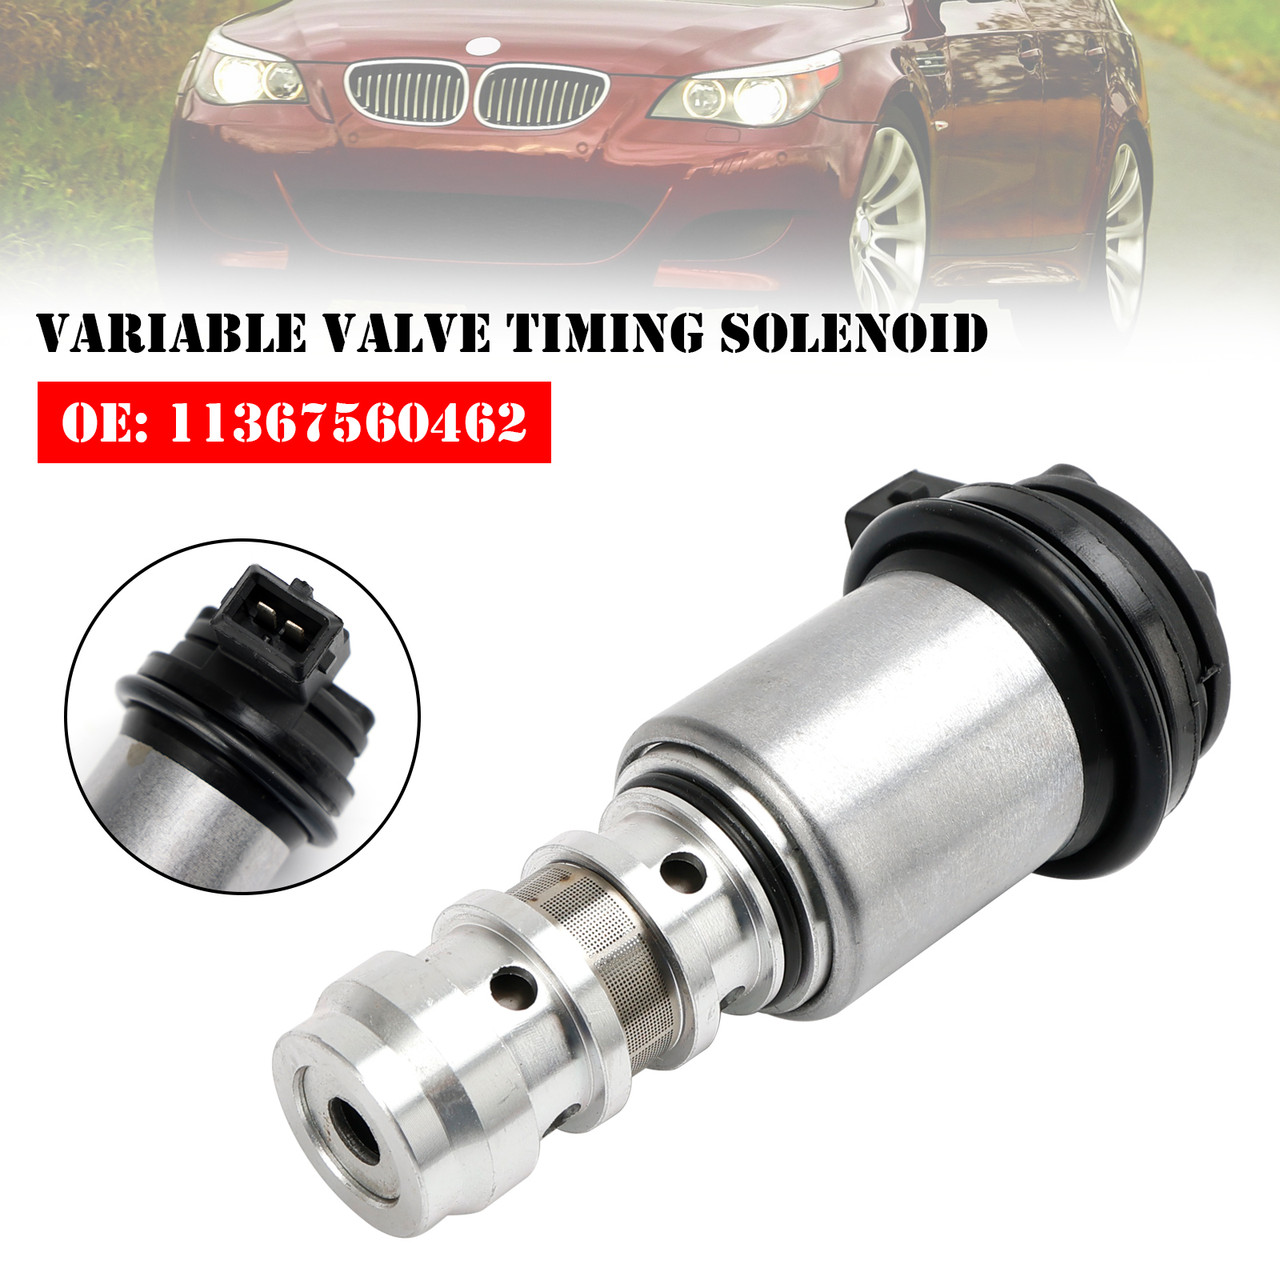 Variable Valve Timing Solenoid for BMW 545i 550 645 650 745i 750i 11367560462